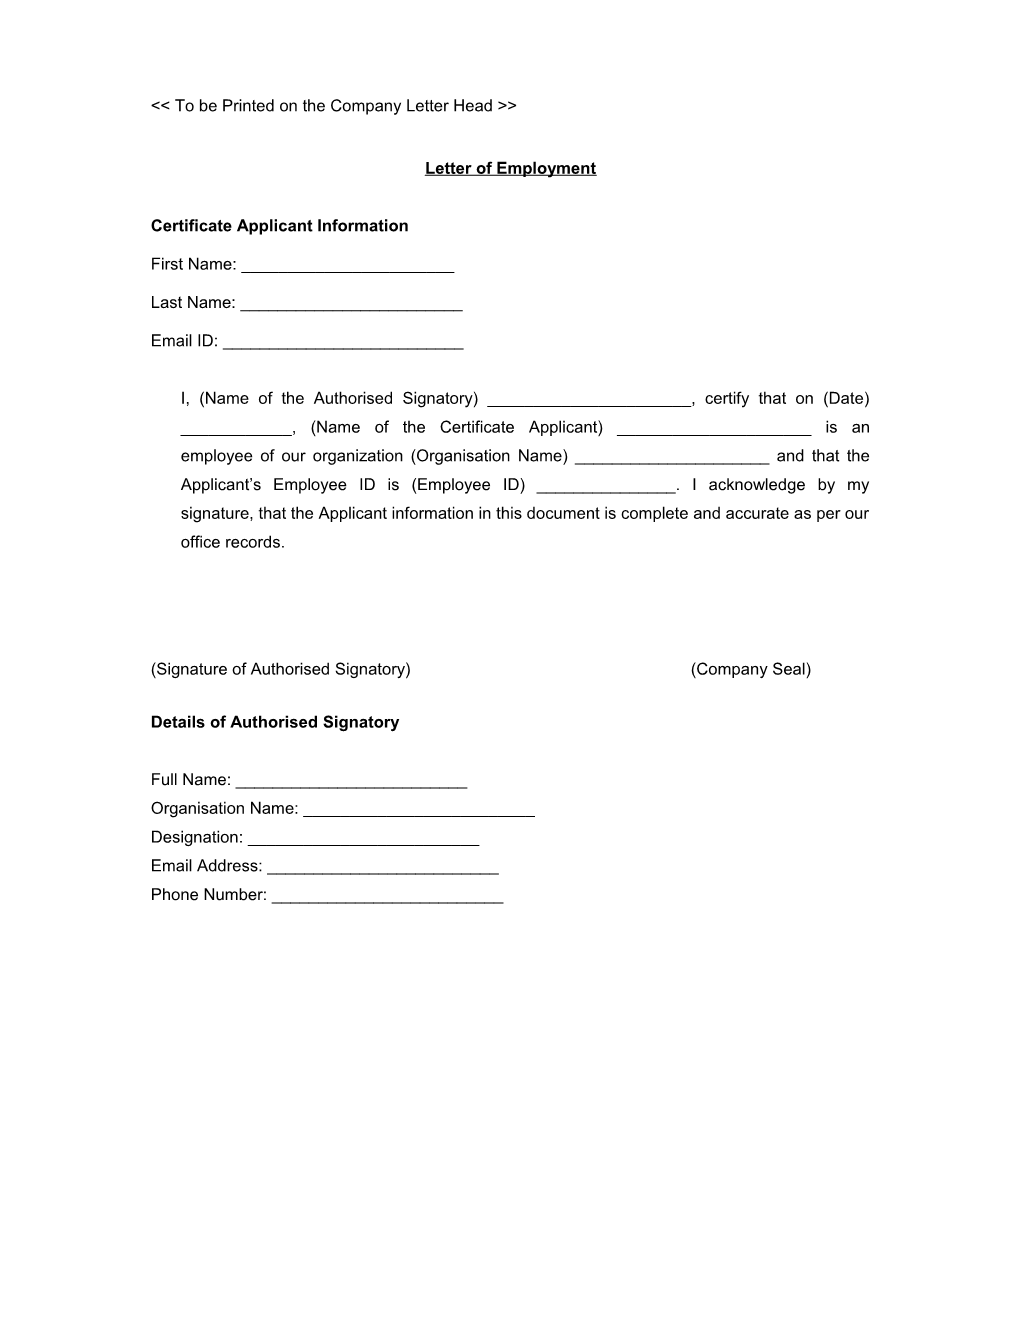 Certificate Application Attestation Form